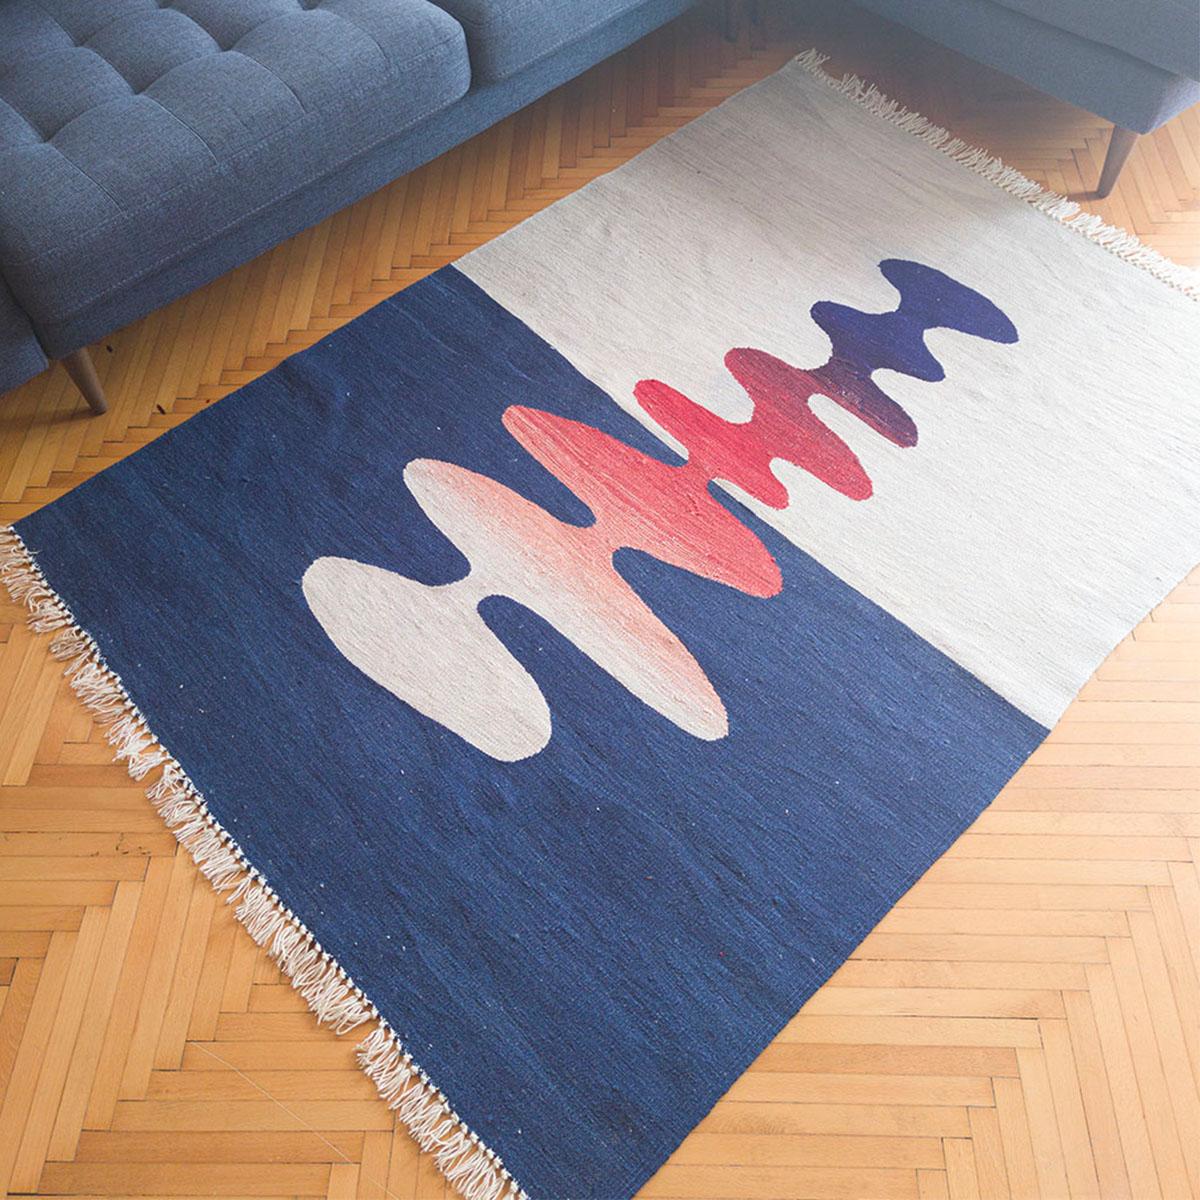 2.6' x 4' rugs